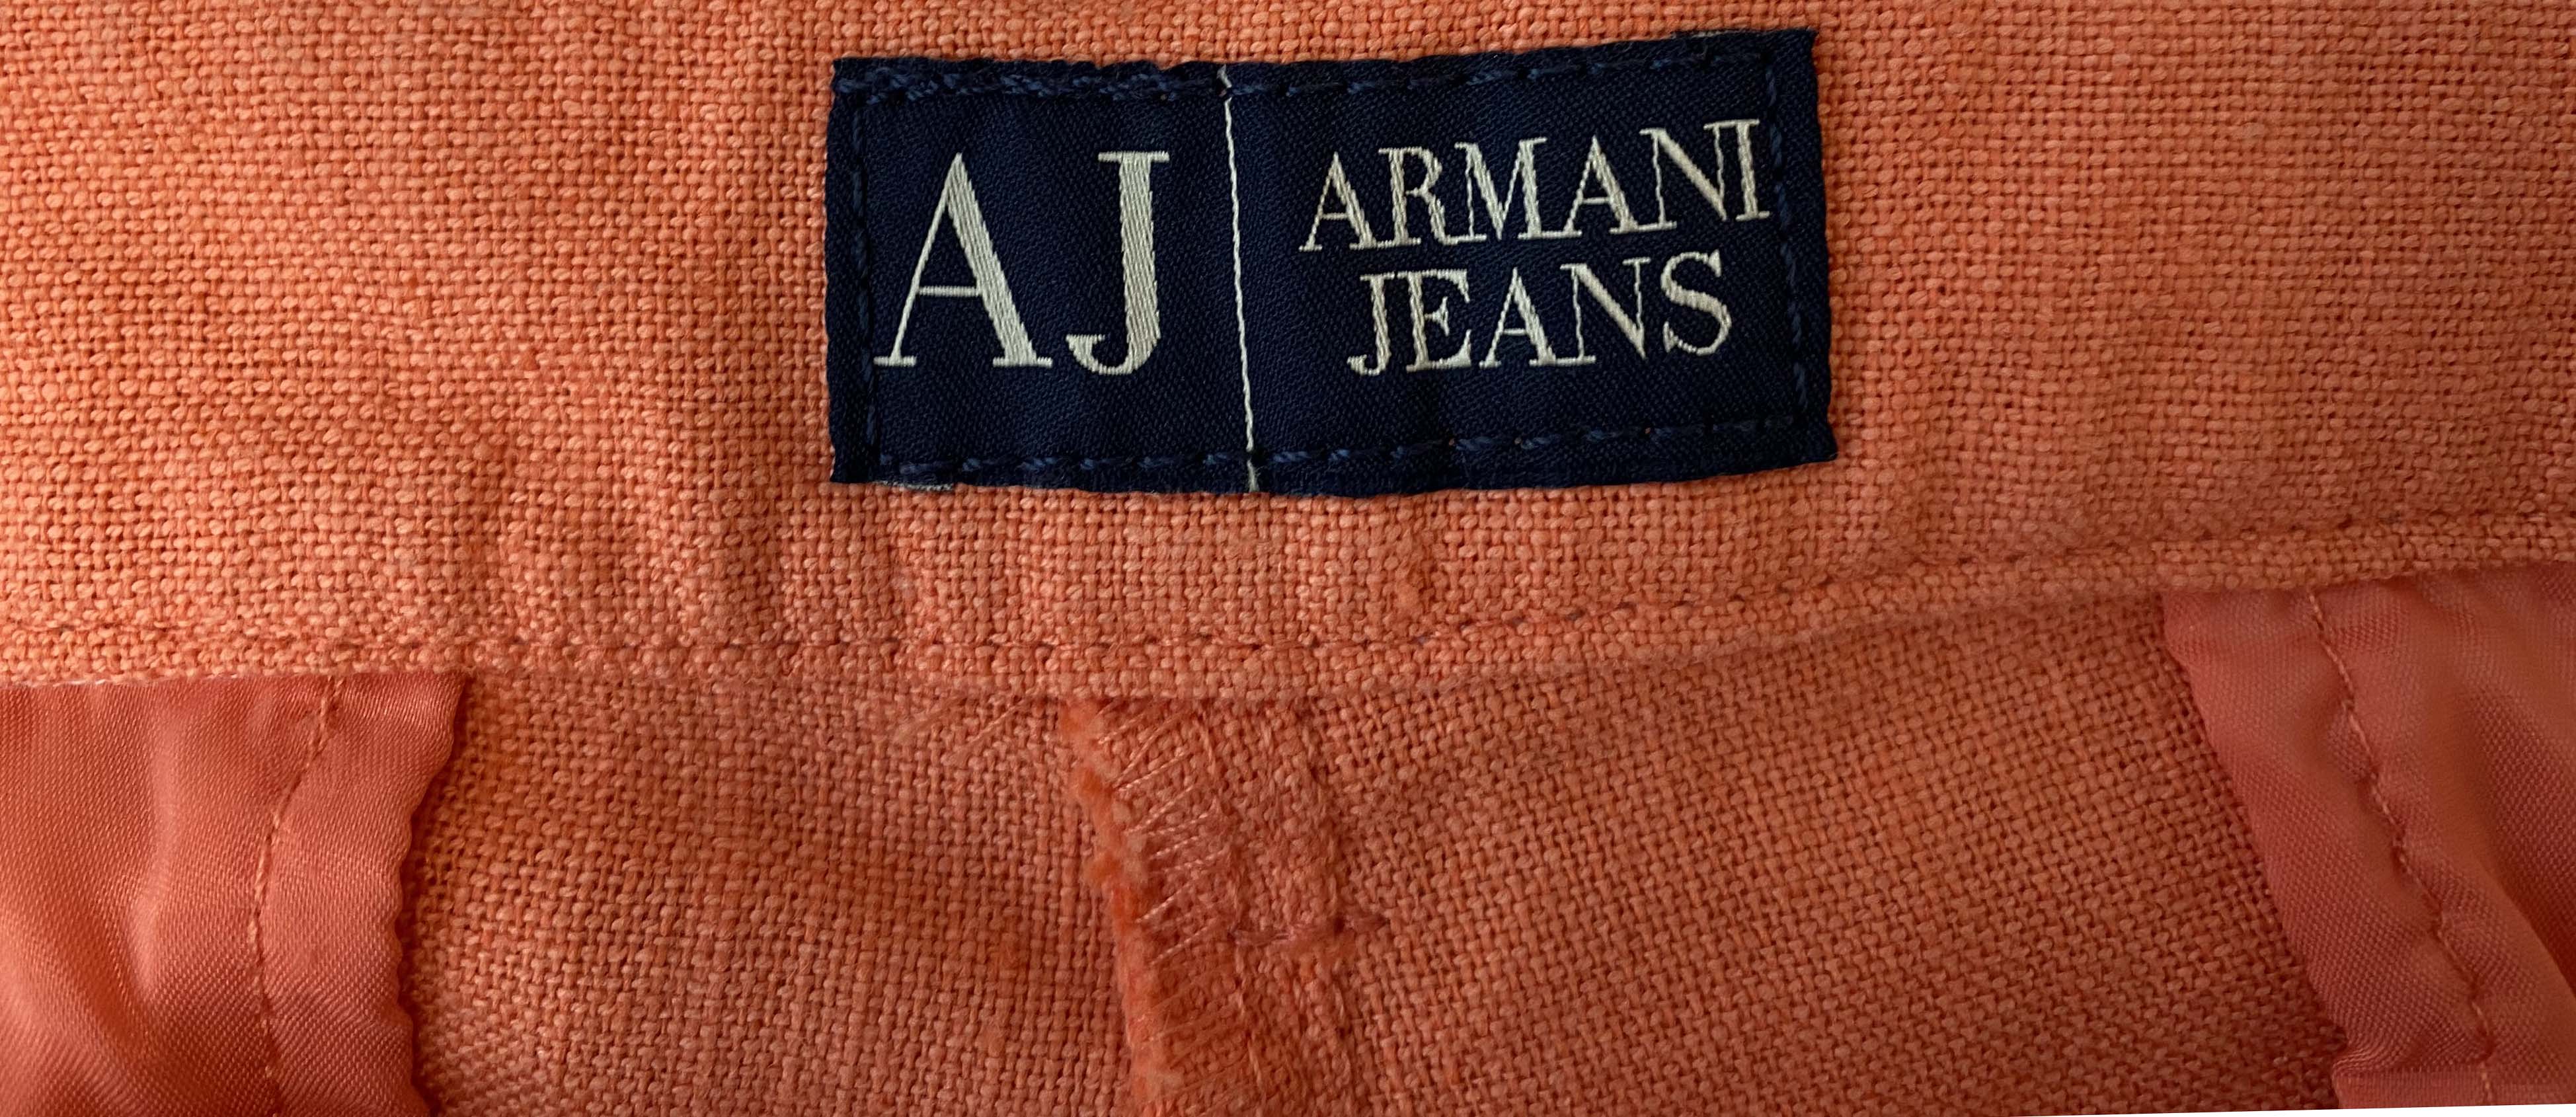 ARMANI JEANS Orange Trousers